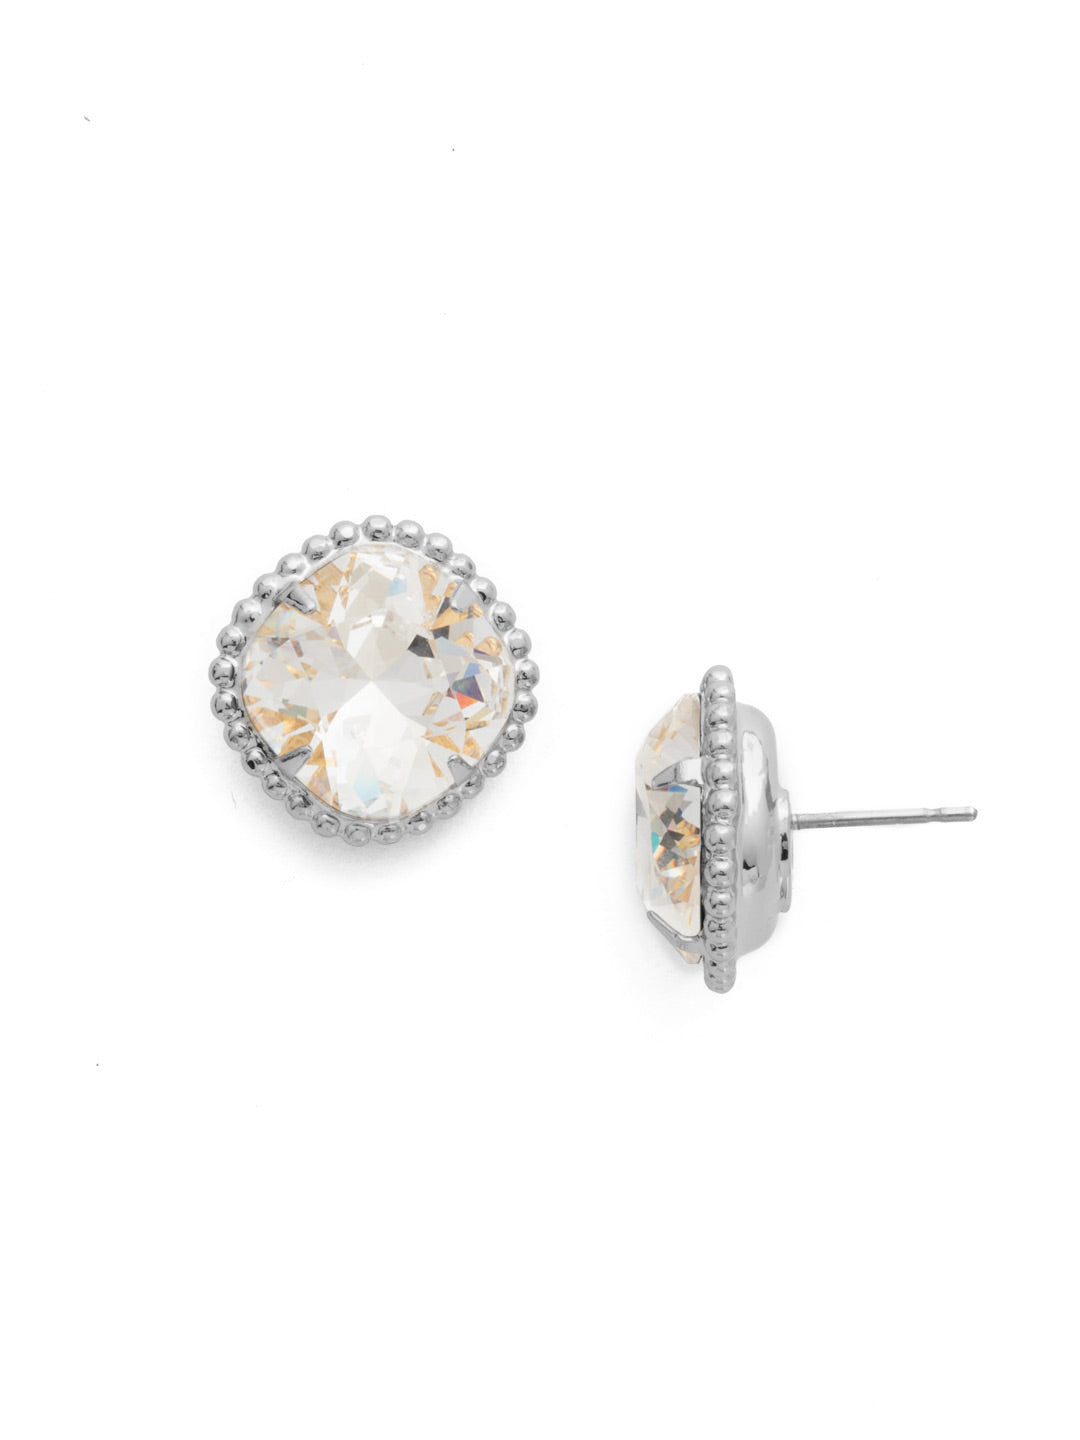 Update more than 185 swarovski solitaire pierced earrings